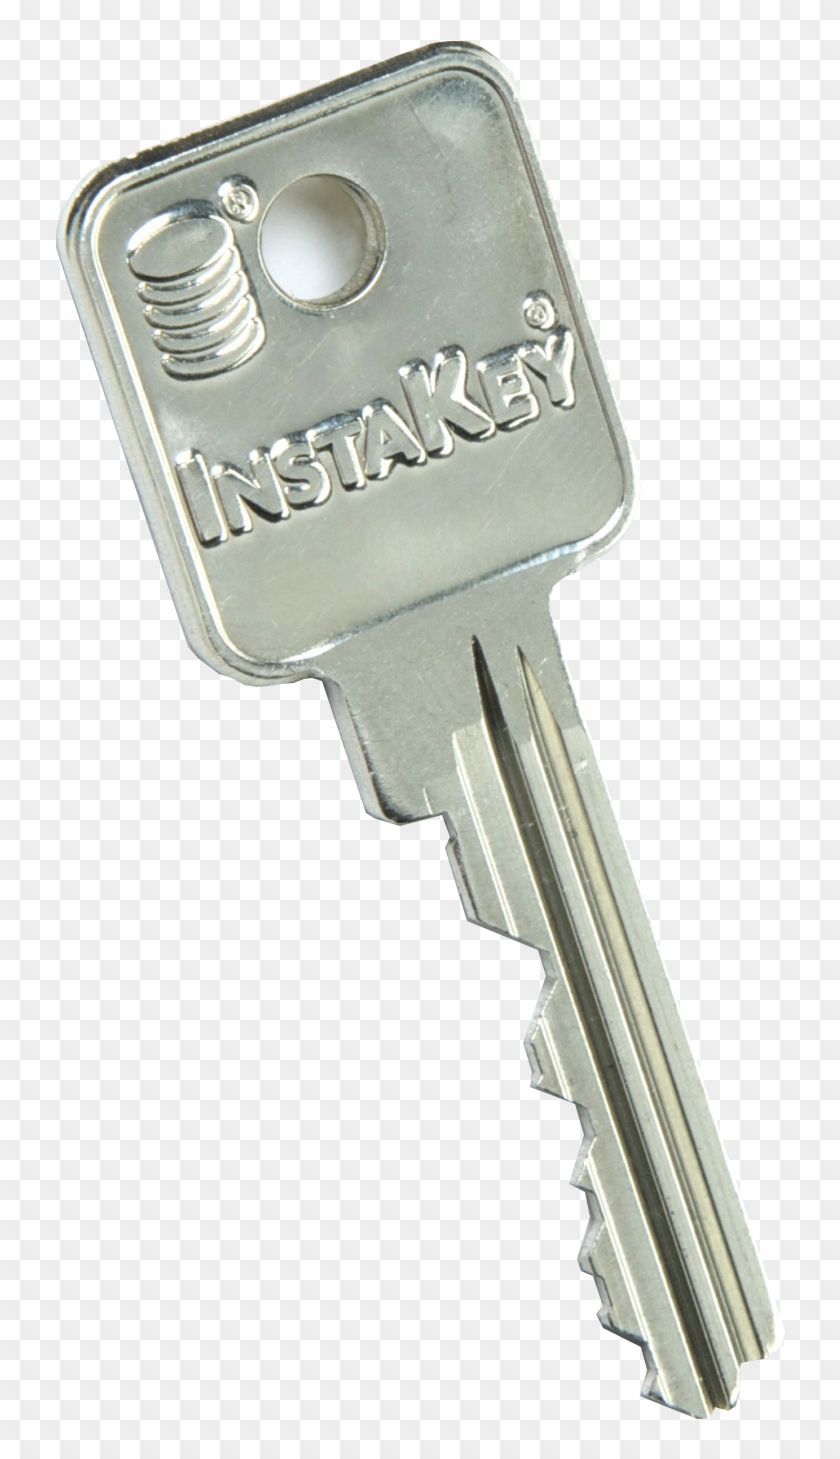 Sfic Arrow Key - Key Clipart #5554875